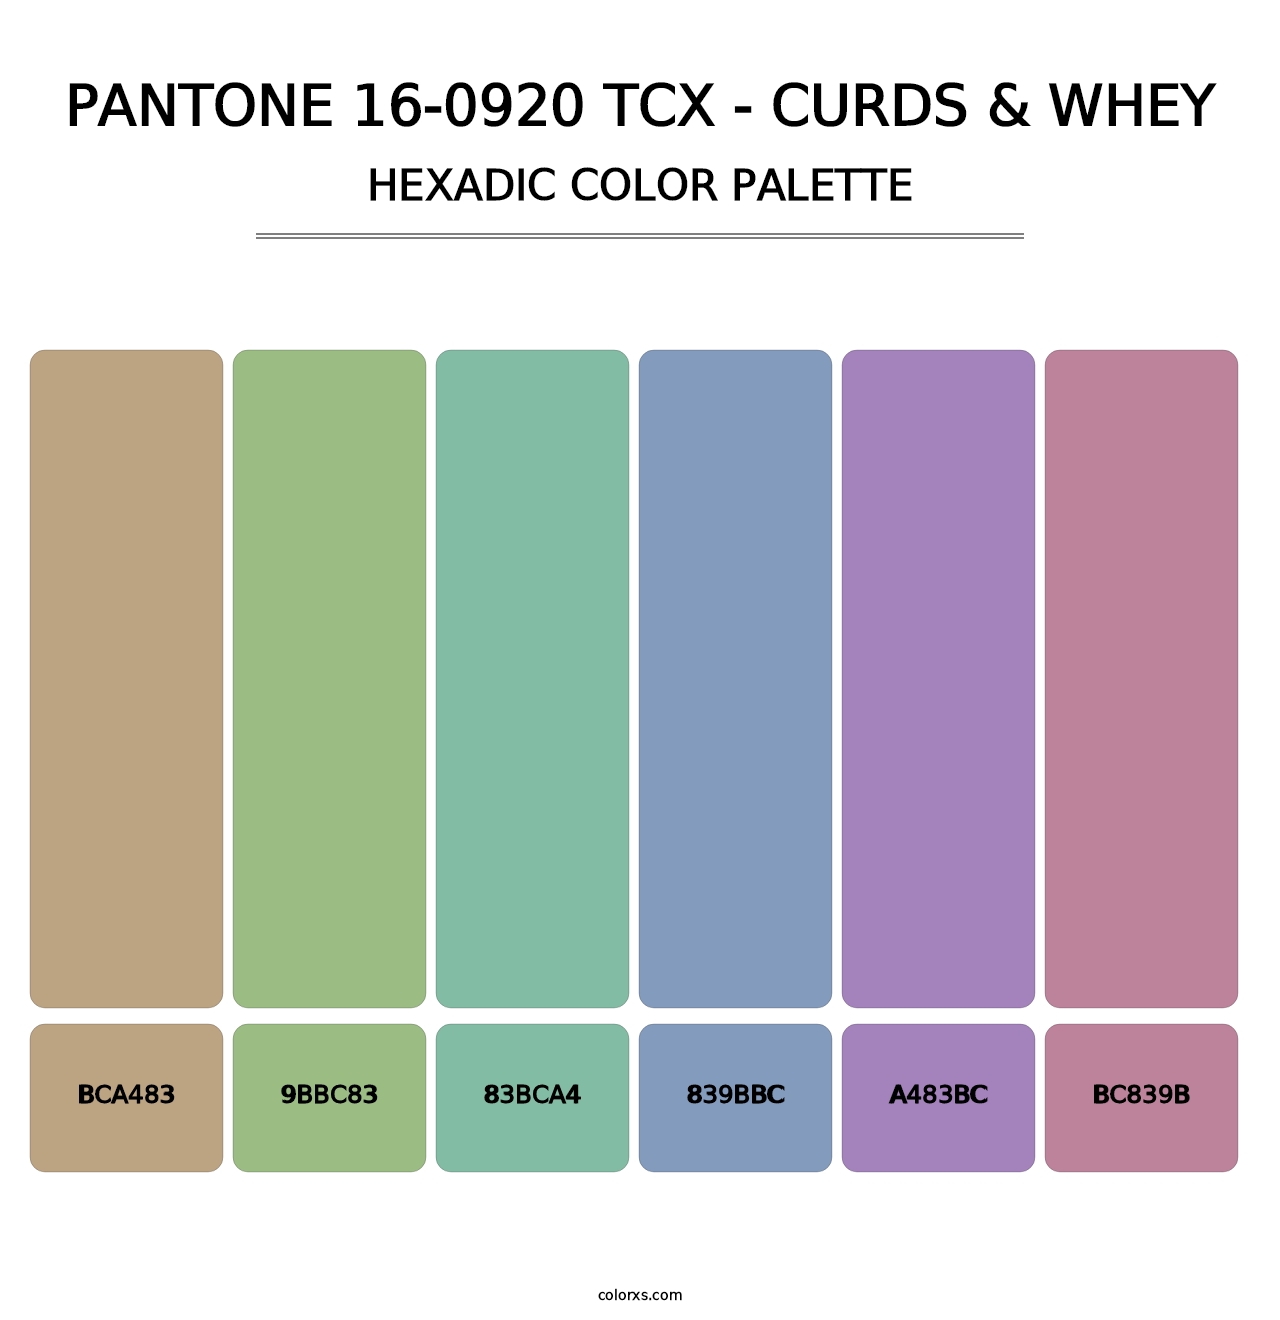 PANTONE 16-0920 TCX - Curds & Whey - Hexadic Color Palette